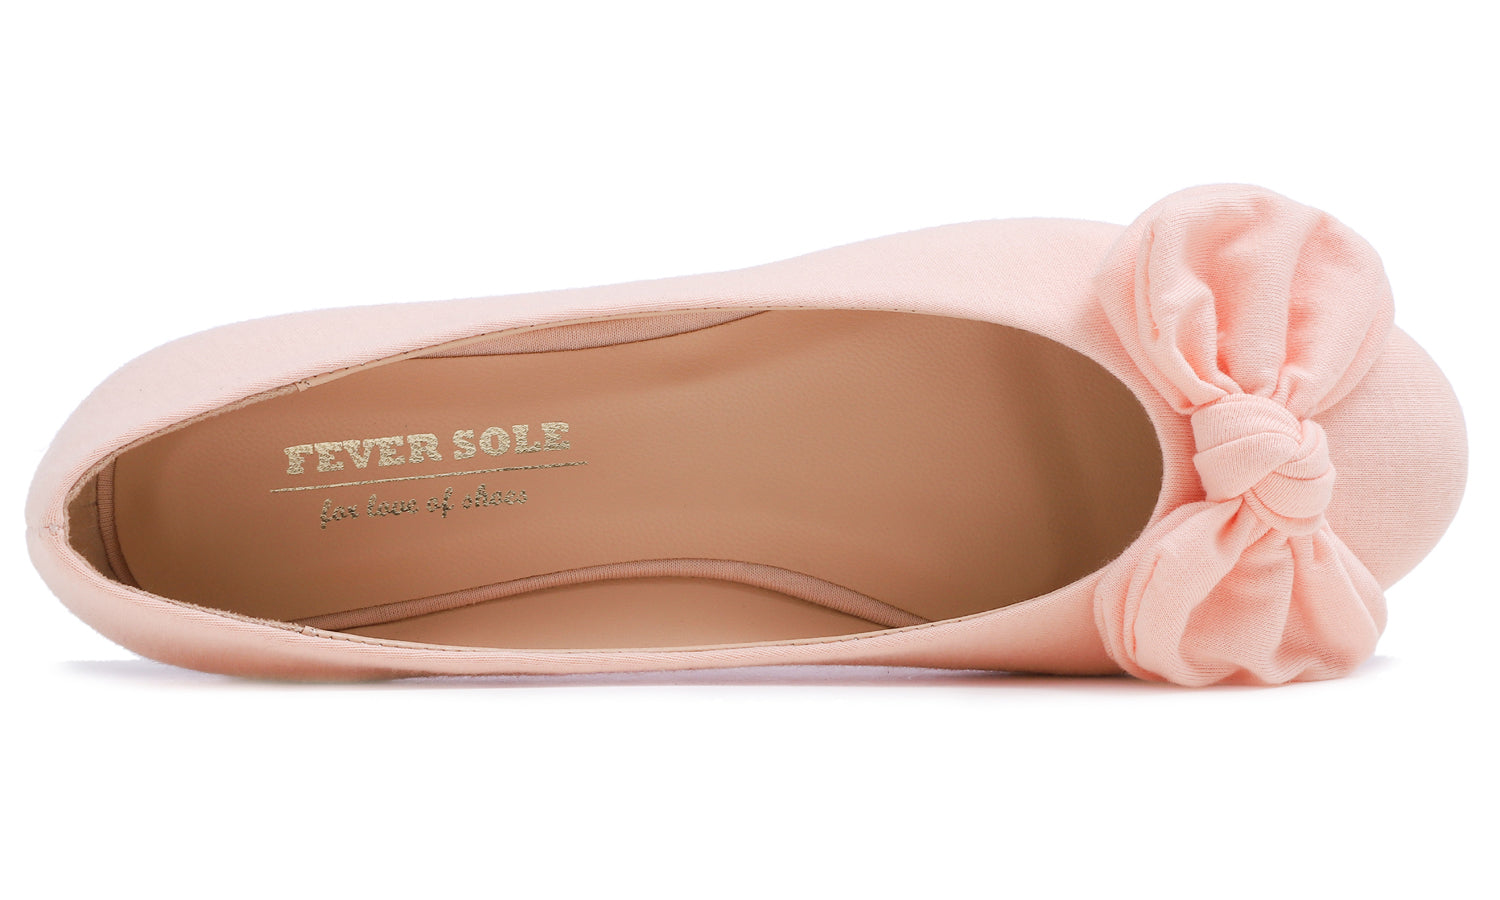 Feversole Women's Round Toe Cute Bow Trim Ballet Flats Pink Jersey